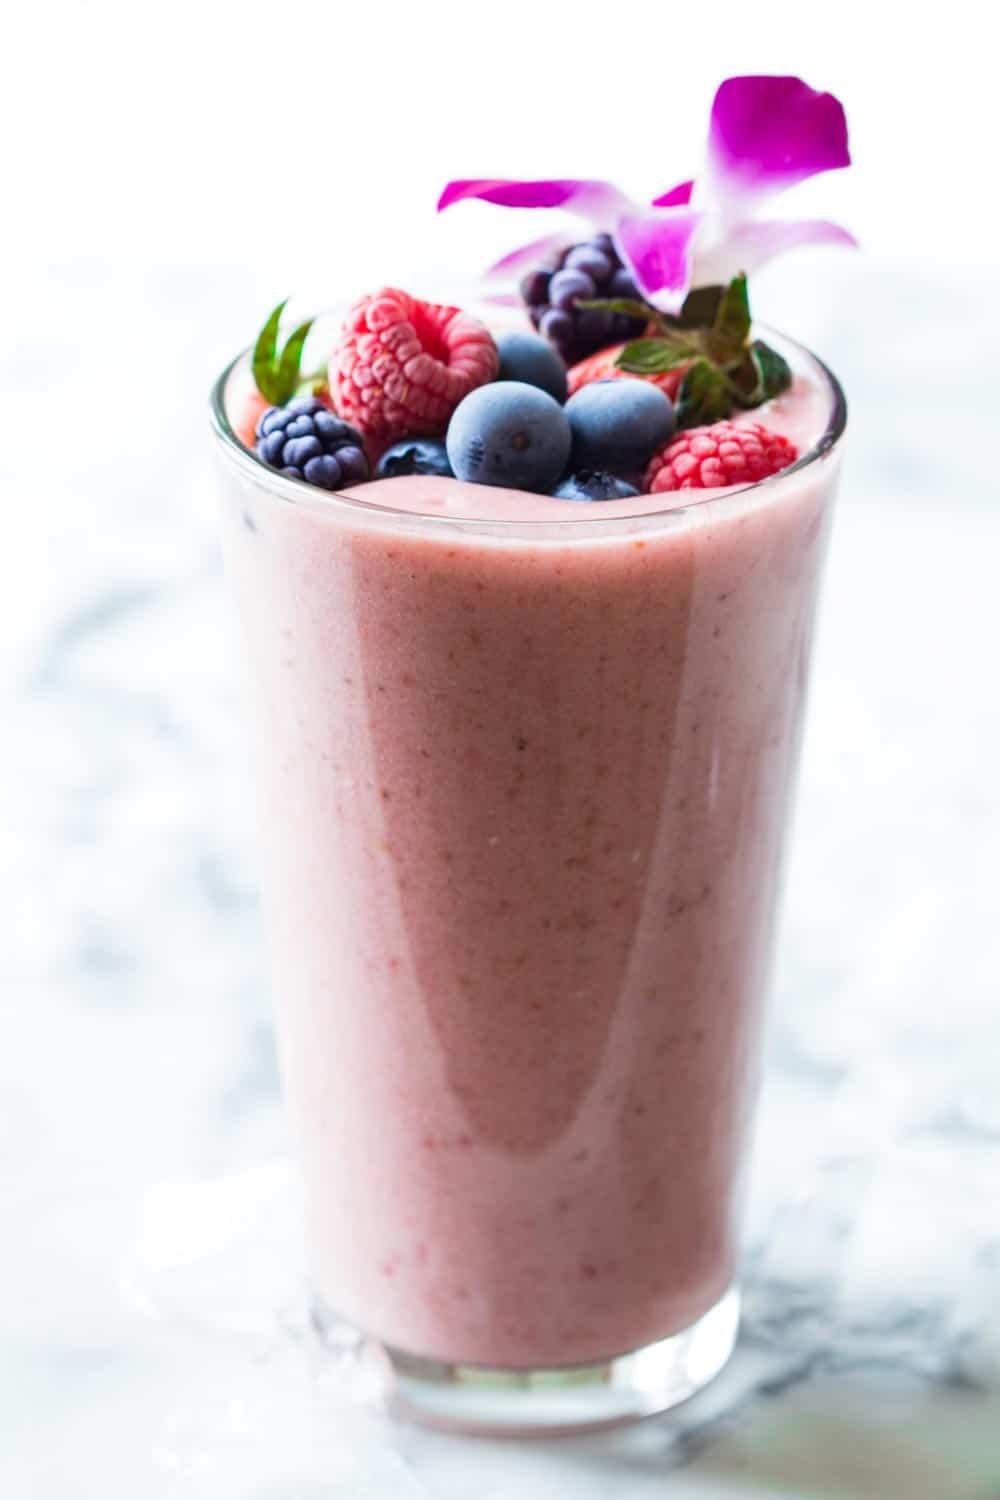 Strawberry Smoothie Without Yogurt